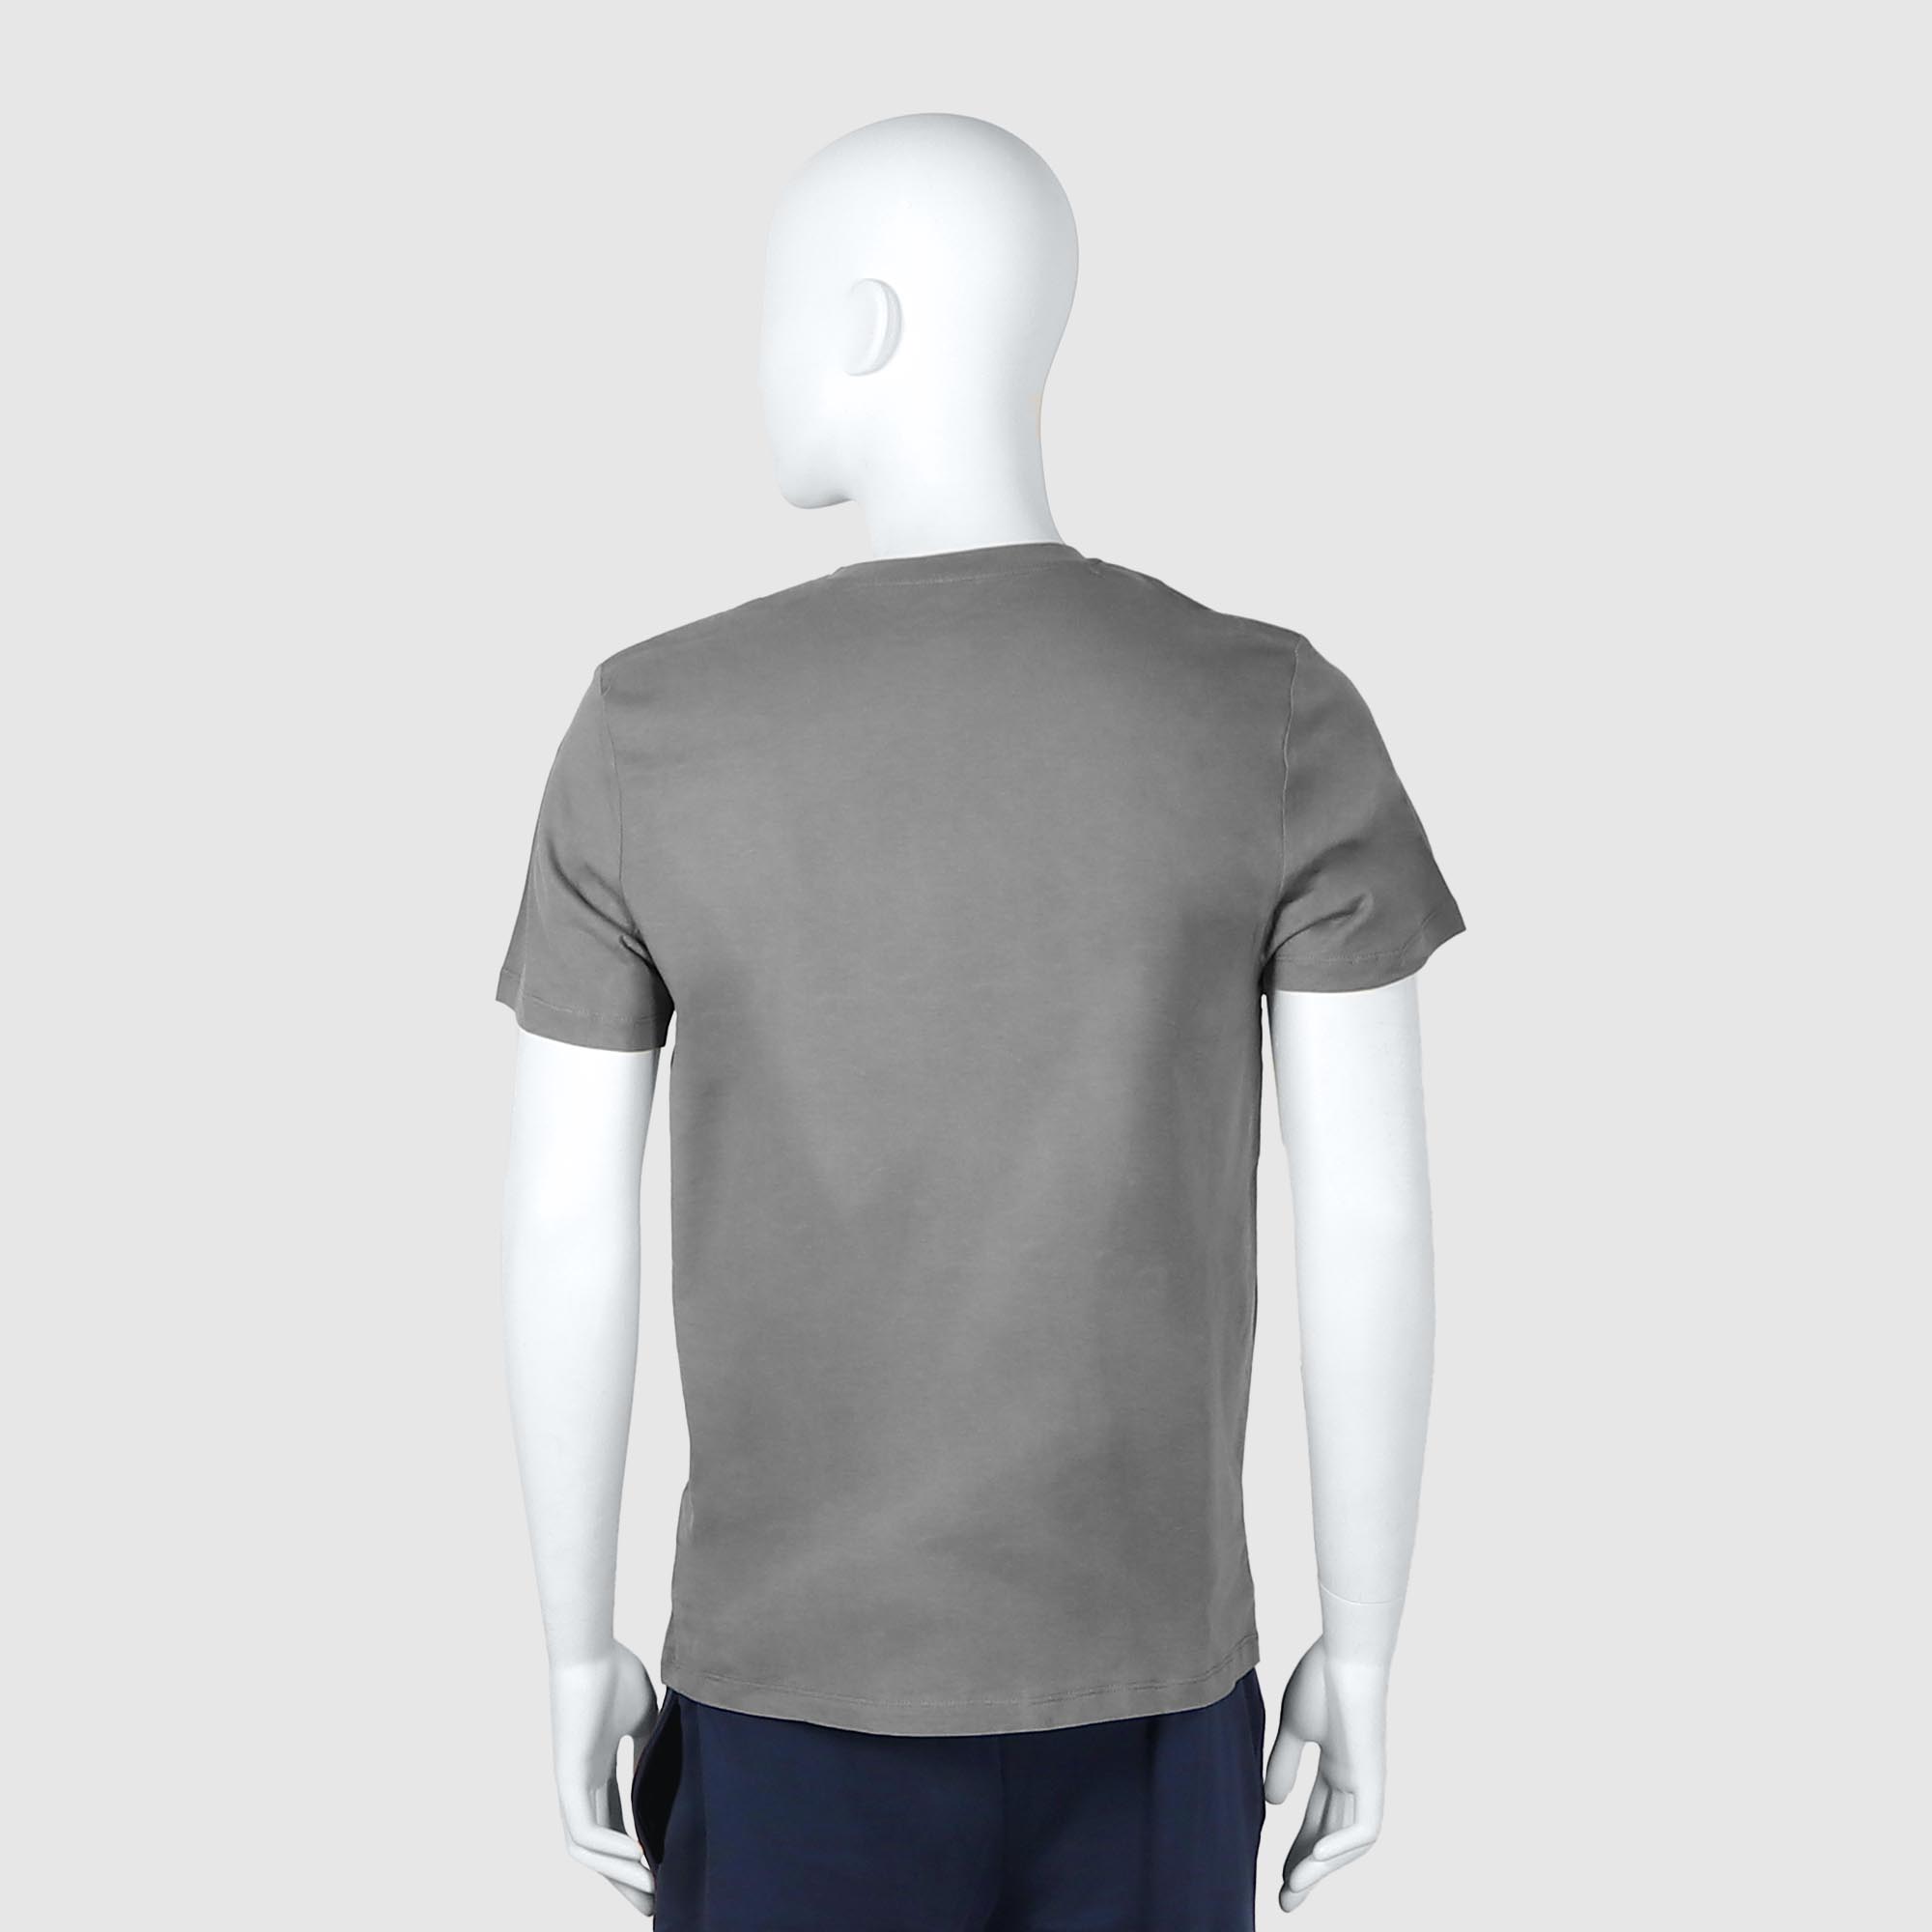 Мужская футболка Diva Teks серая (DTD-04), цвет серый, размер 46-48 - фото 2